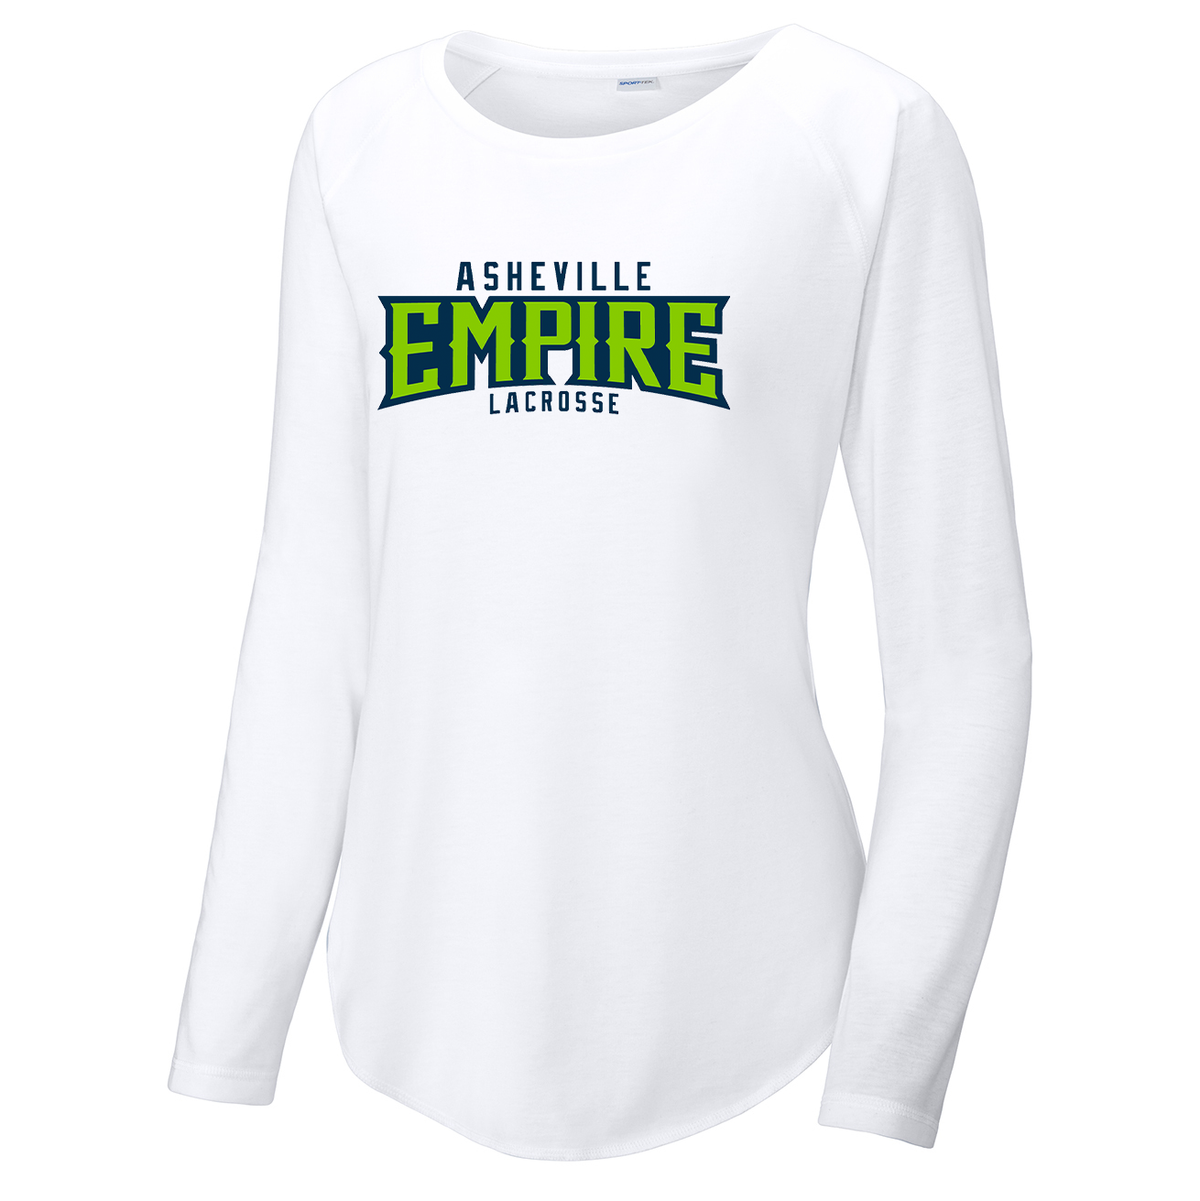 Asheville Empire Lacrosse Women's Raglan Long Sleeve CottonTouch